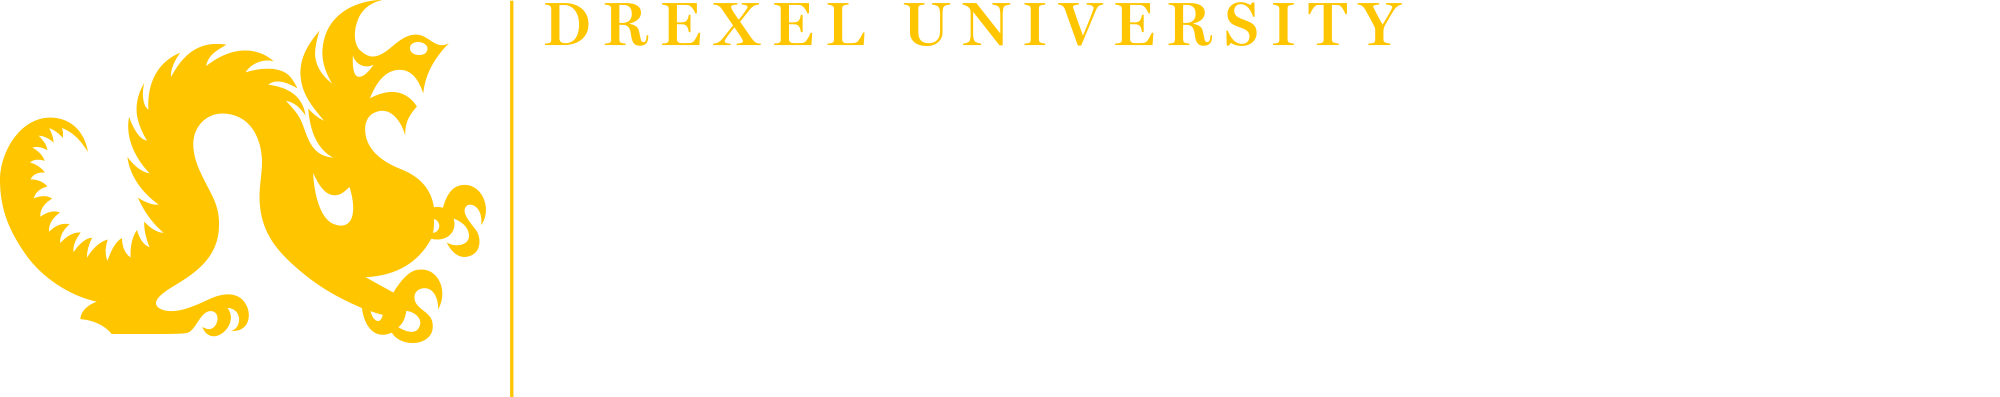 Drexel University Academic Resource Center with dragon image